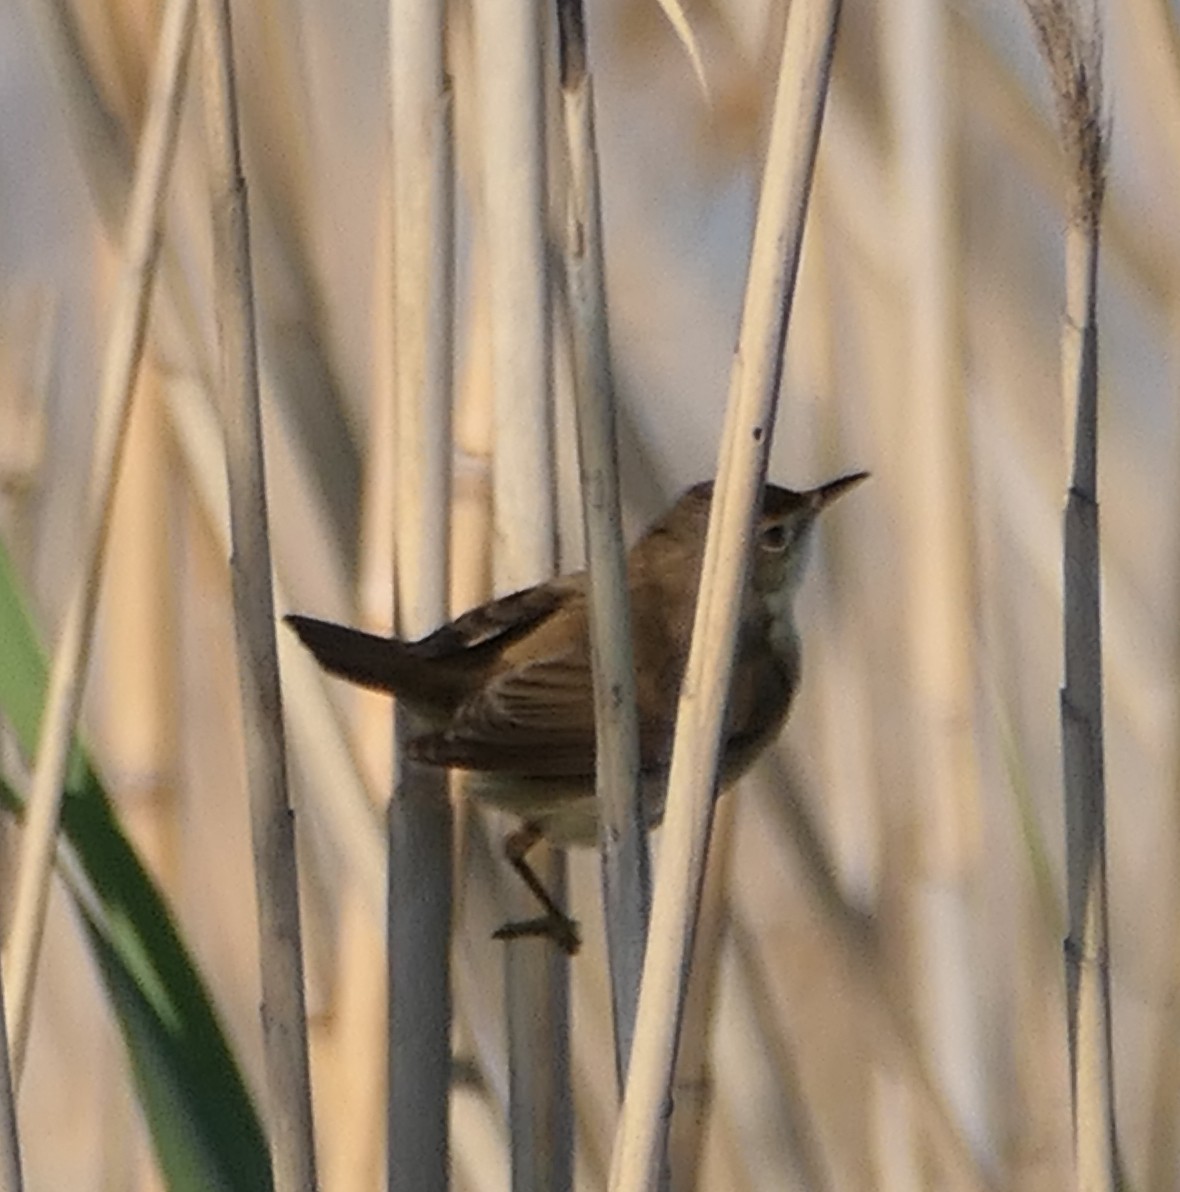 Common Reed Warbler - Dmitrii Konov